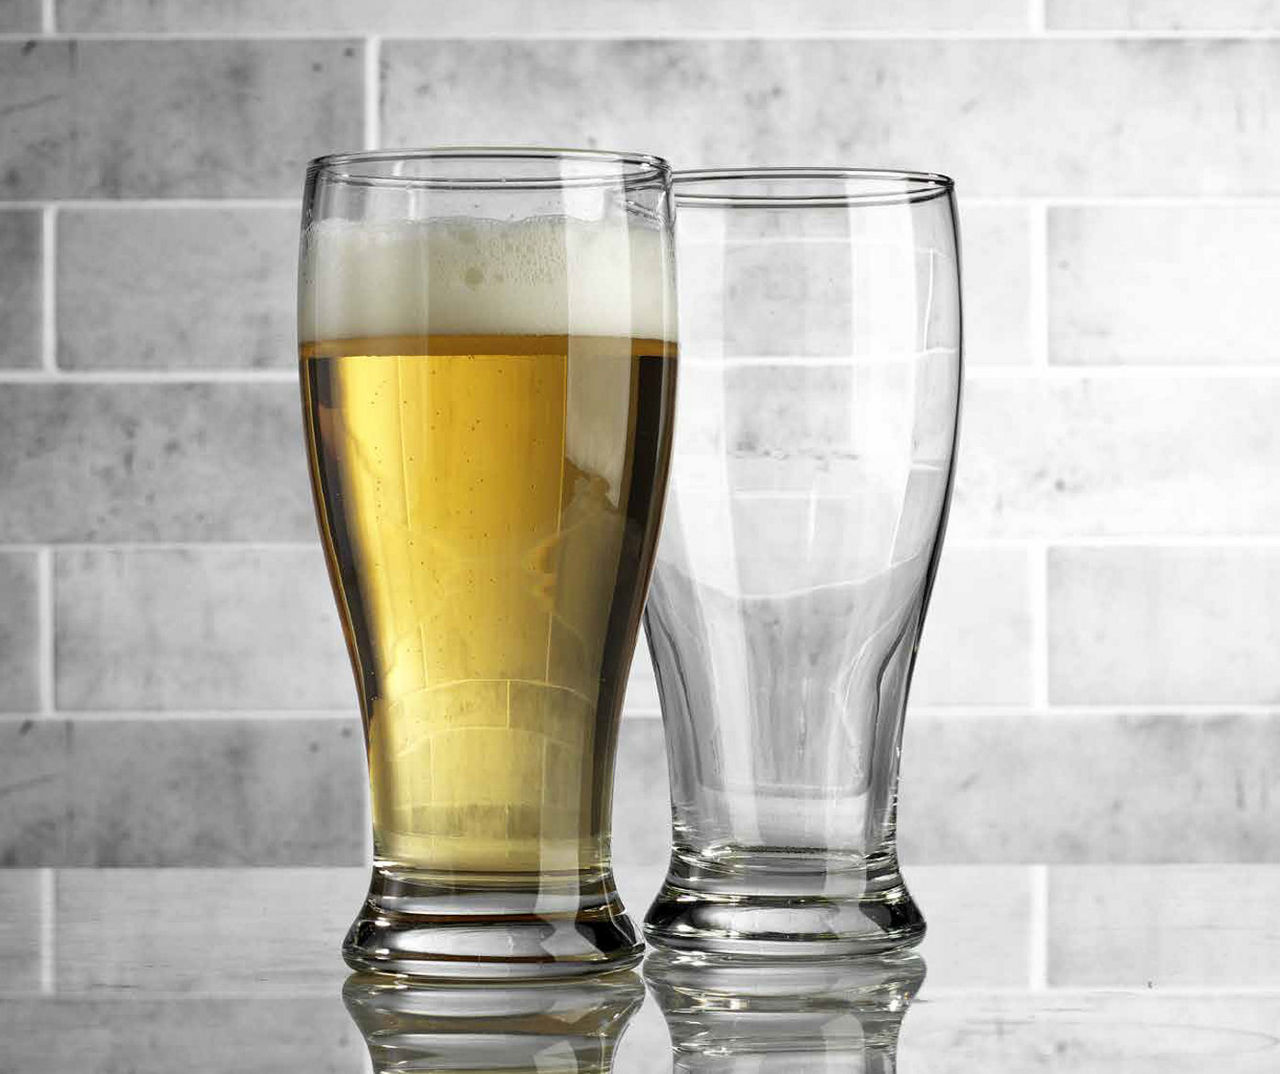 Realtree Pilsner Beer Glasses - Set of 4